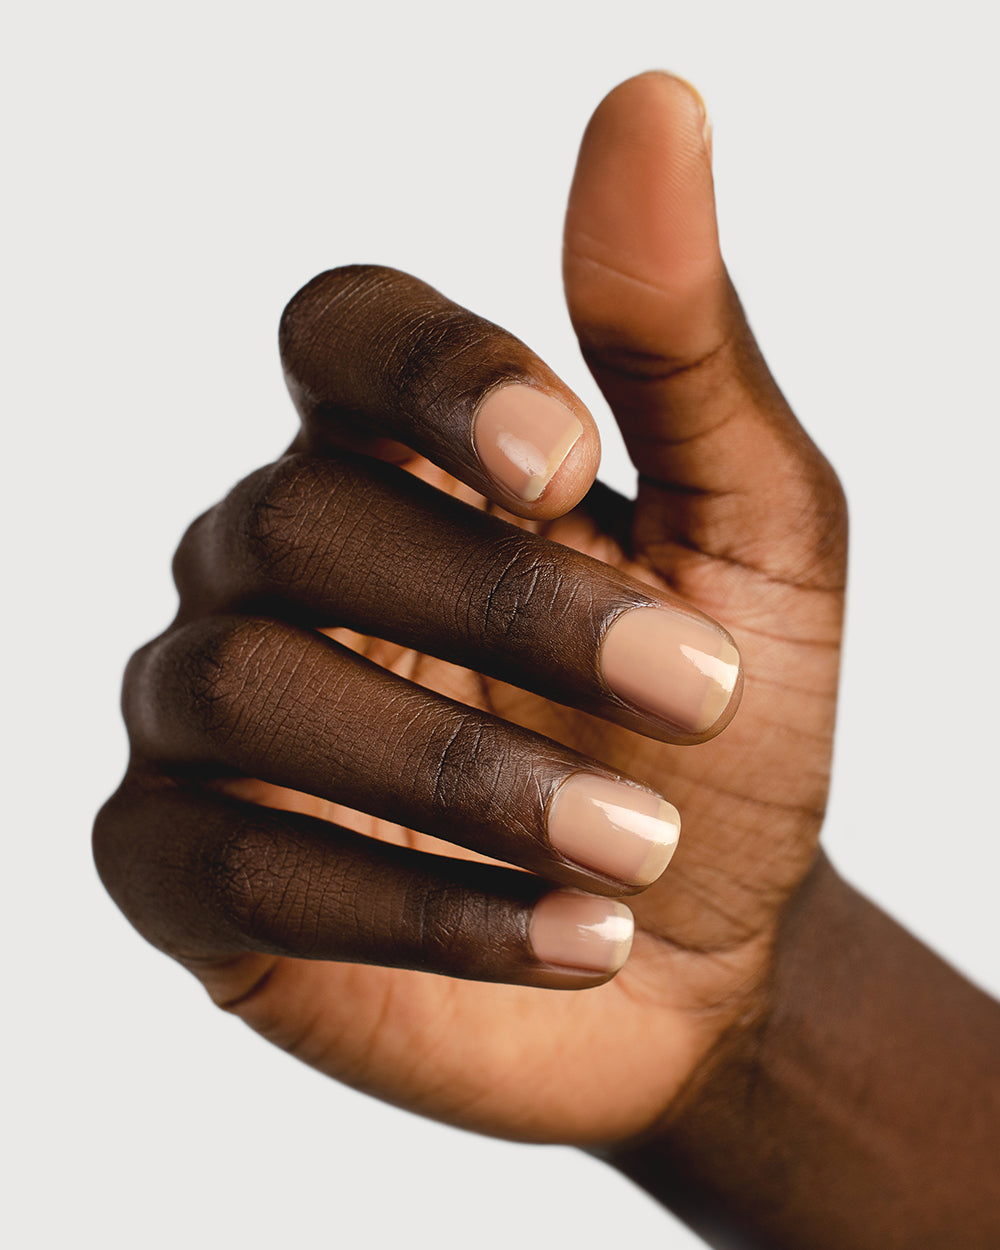 nude sheer nail polish hand swatch on dark skin tone